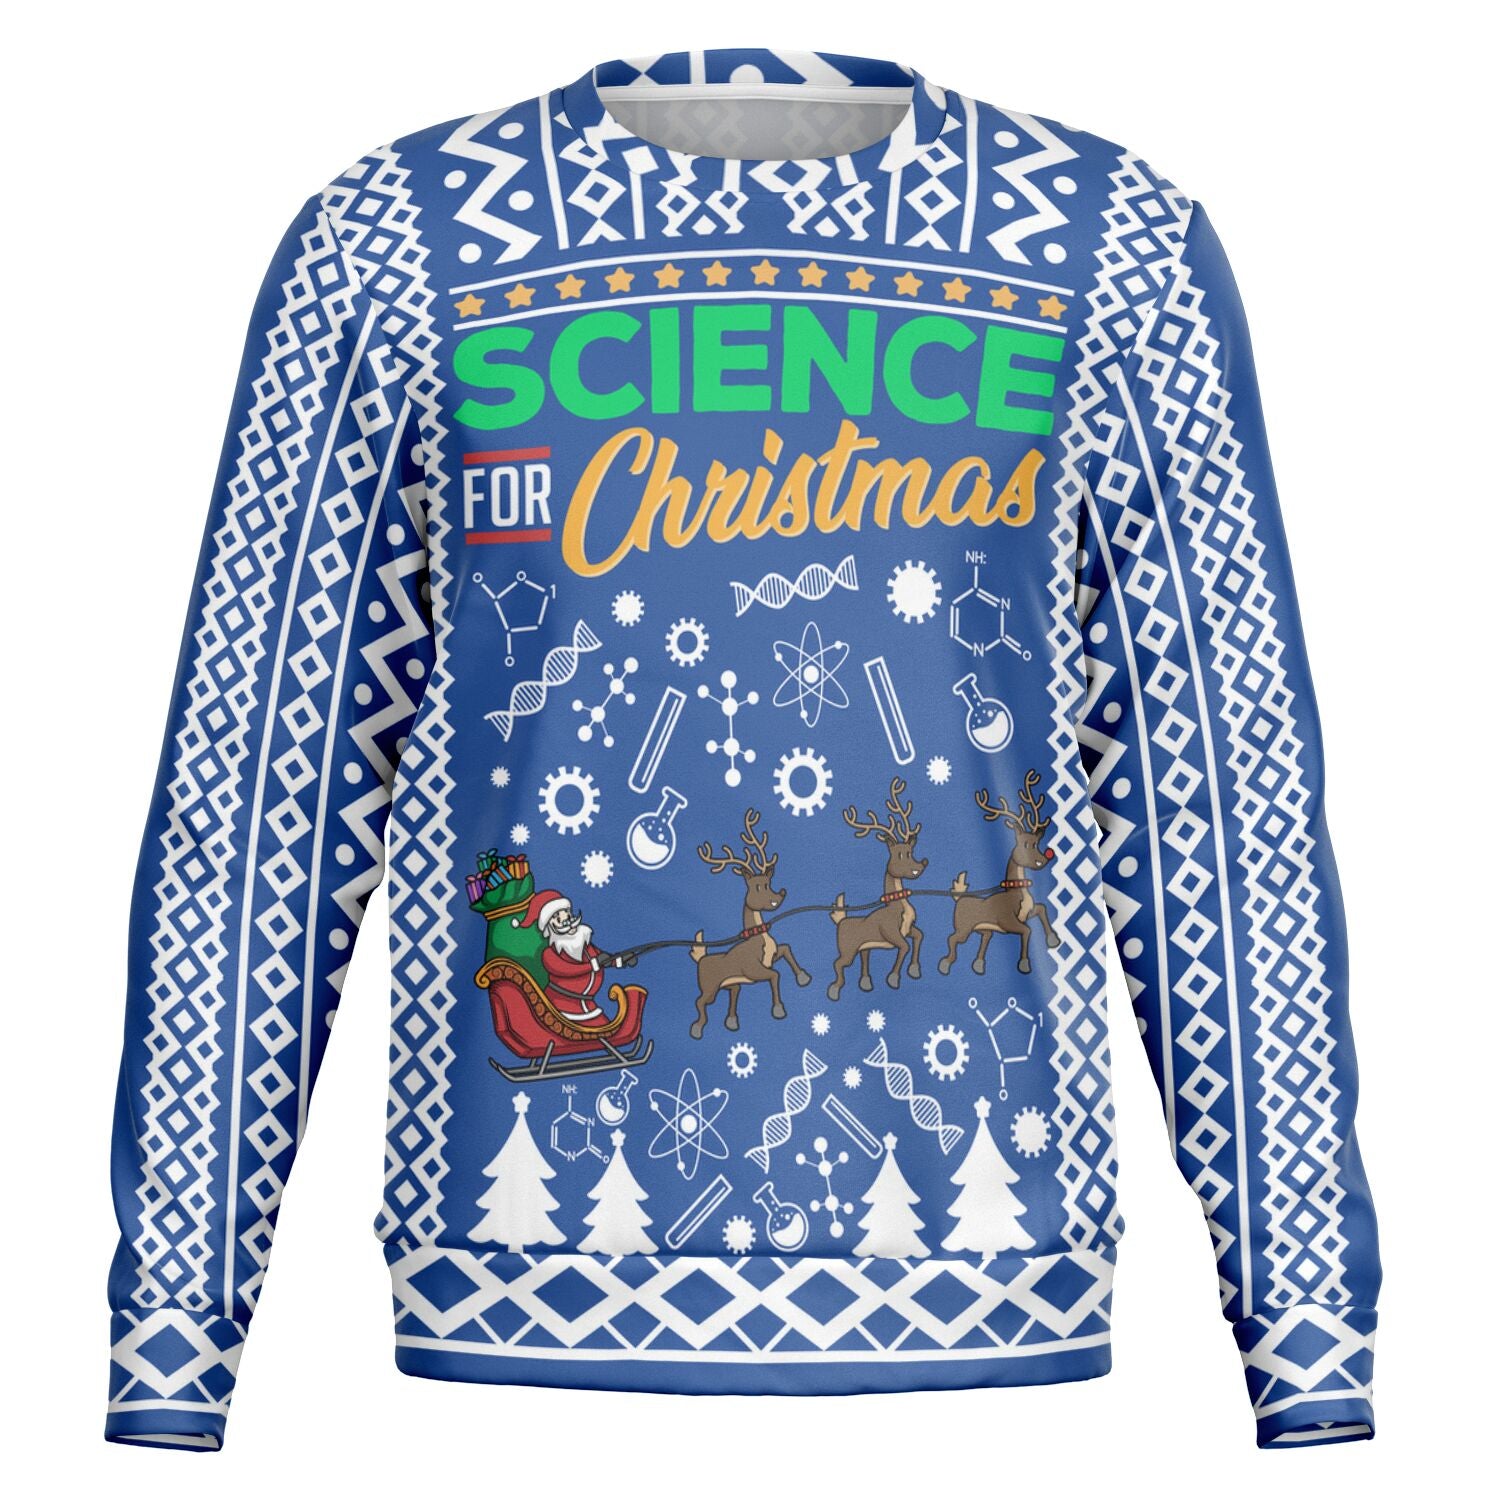 Science for Christmas Sweatshirt